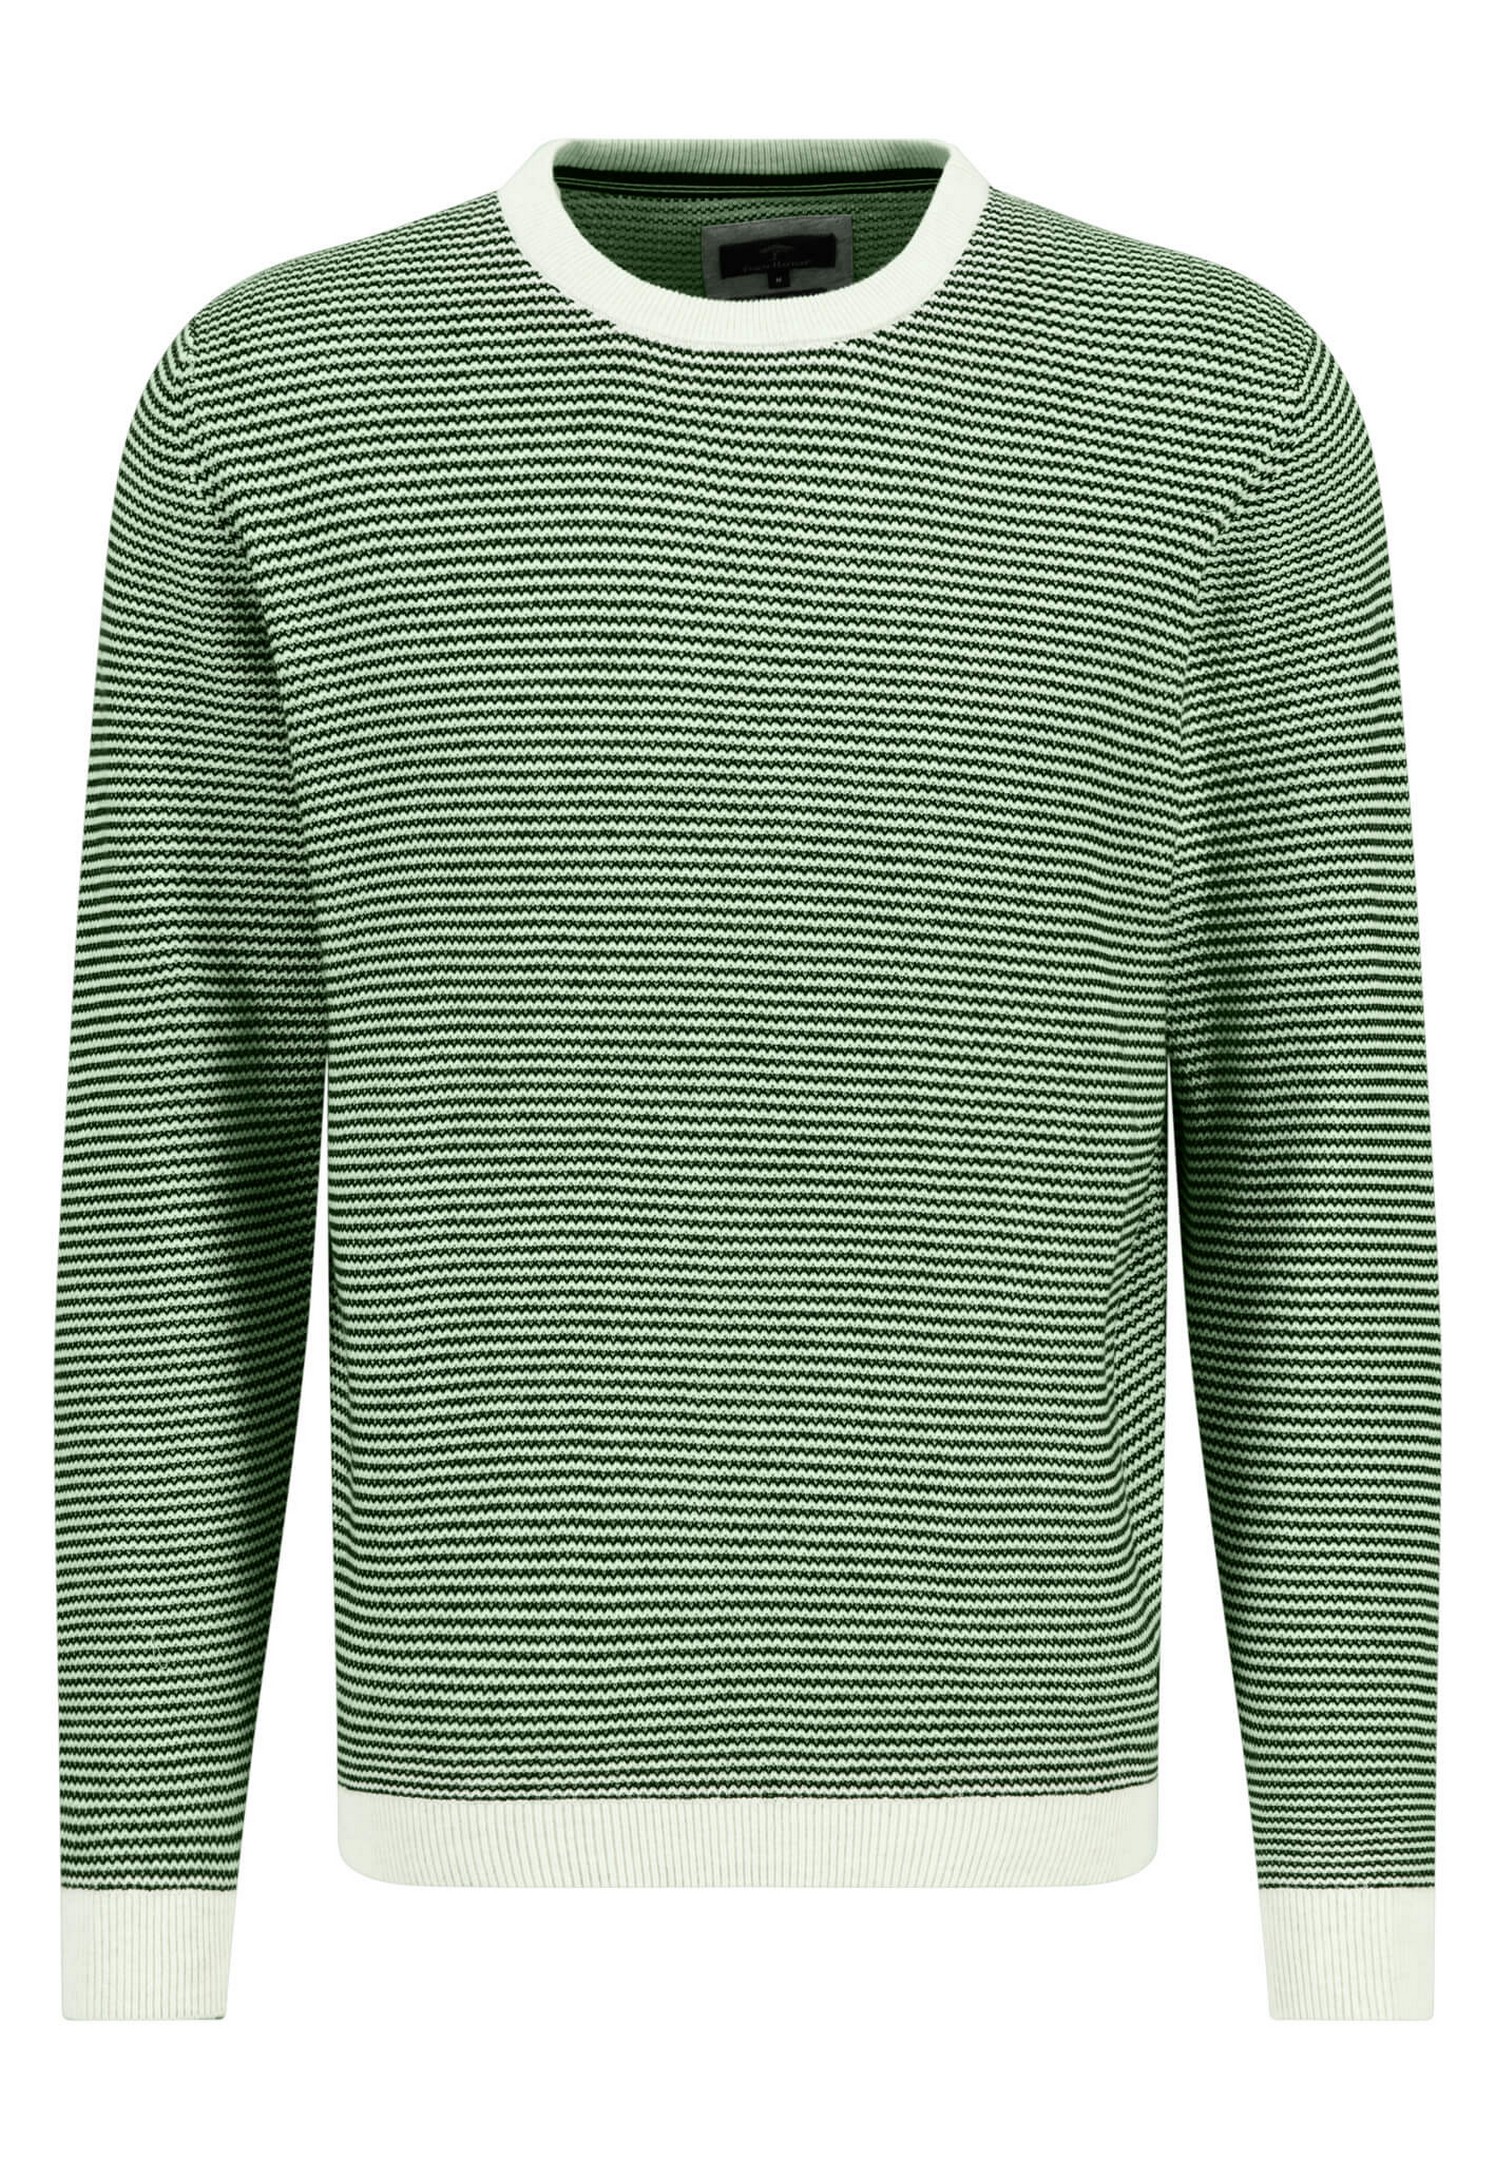 Fynch-Hatton Two-Tone Stripe Texture Knit O-Neck Superfine Cotton Pullover Spring  Green | Jan Rozing Men's Fashion